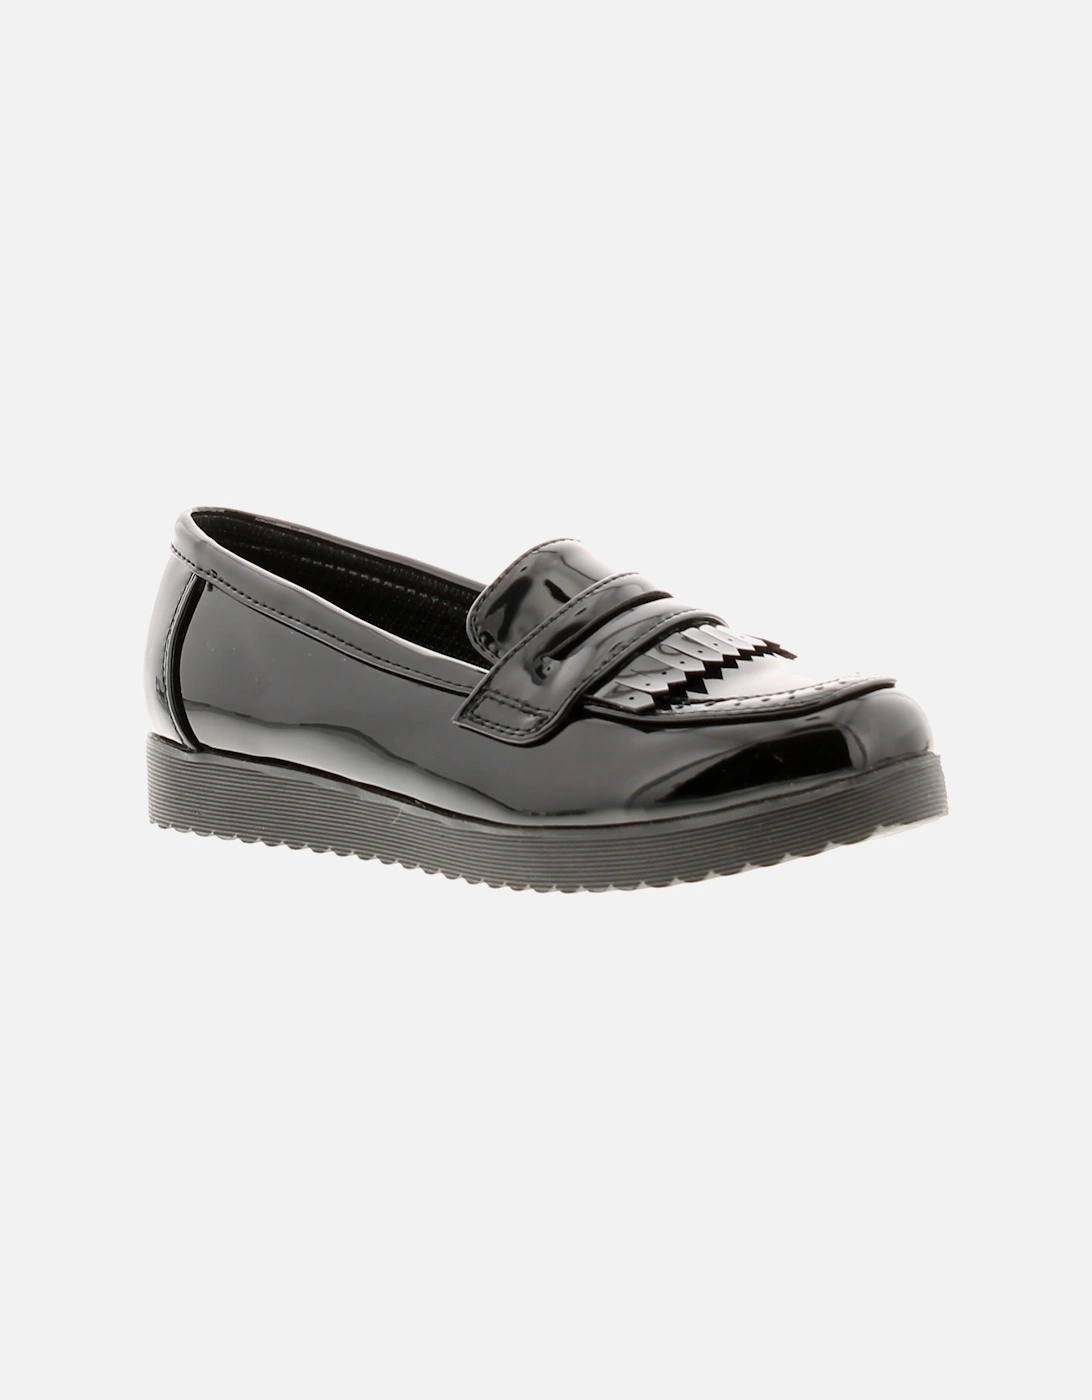 Girls School Shoes Abbie Slip On black UK Size, 6 of 5